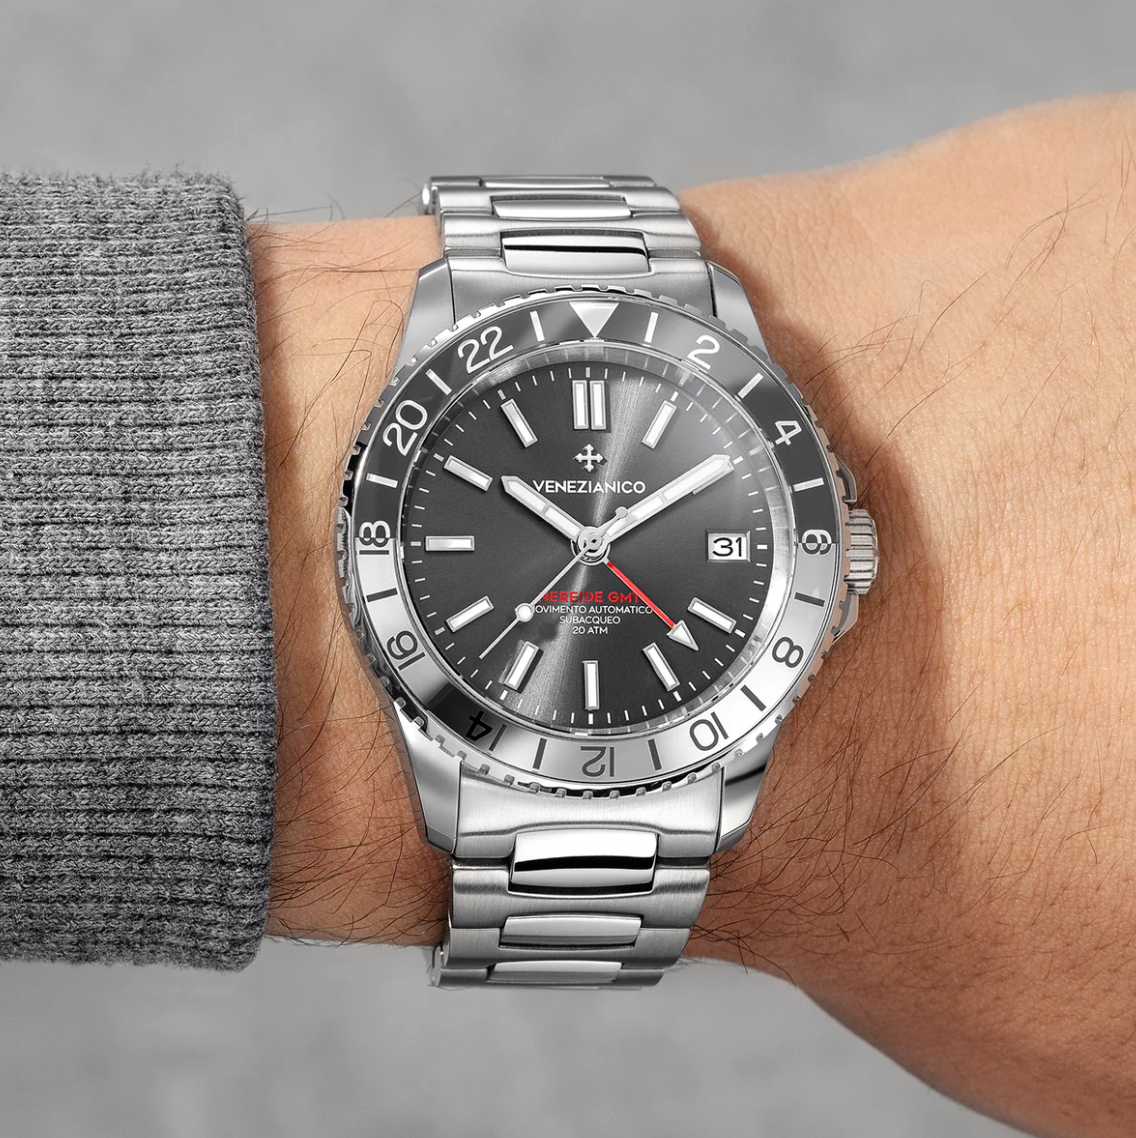 Venezianico Men's Watch Automatic Nereide GMT 3521501C